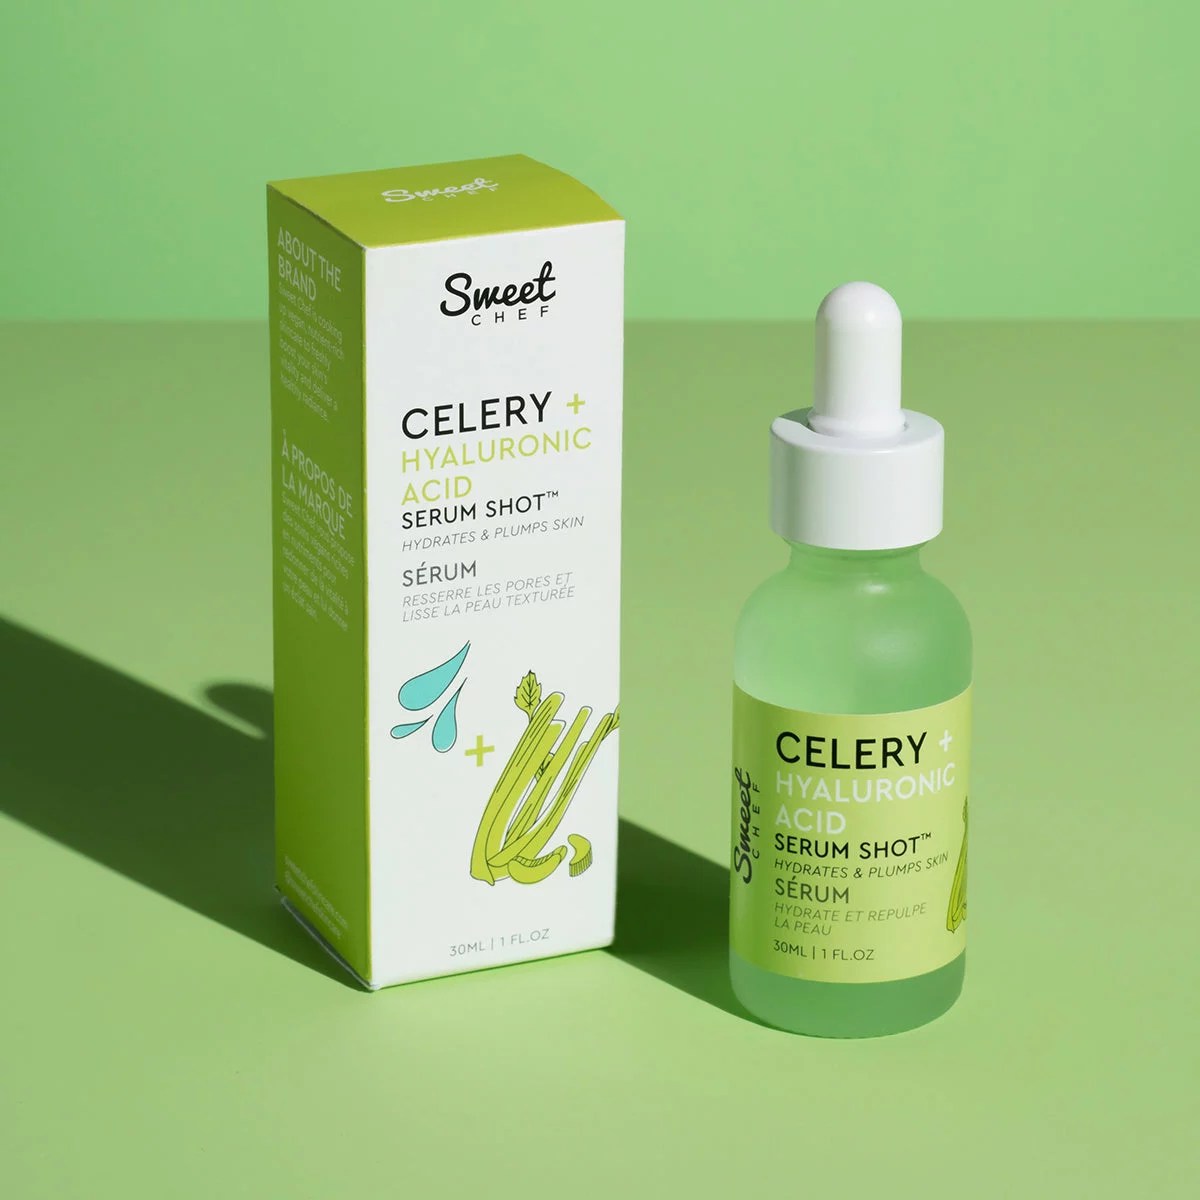 Sweet Chef Celery + Hyaluronic Acid Serum Shot